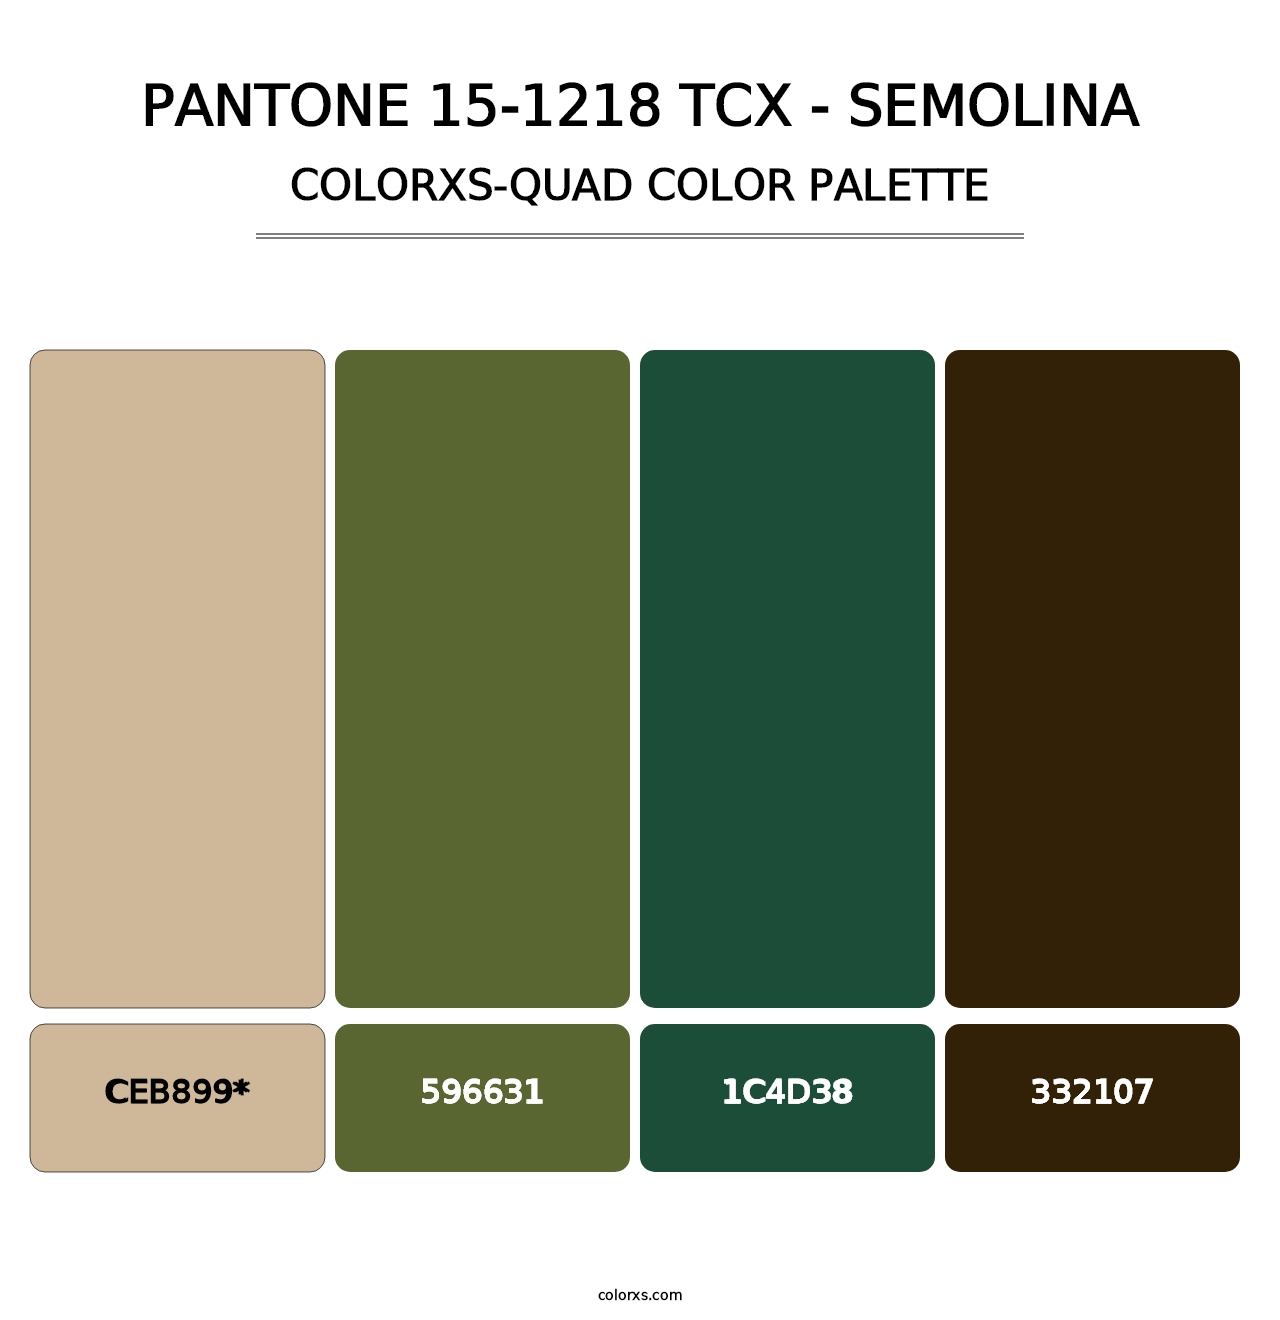 PANTONE 15-1218 TCX - Semolina - Colorxs Quad Palette